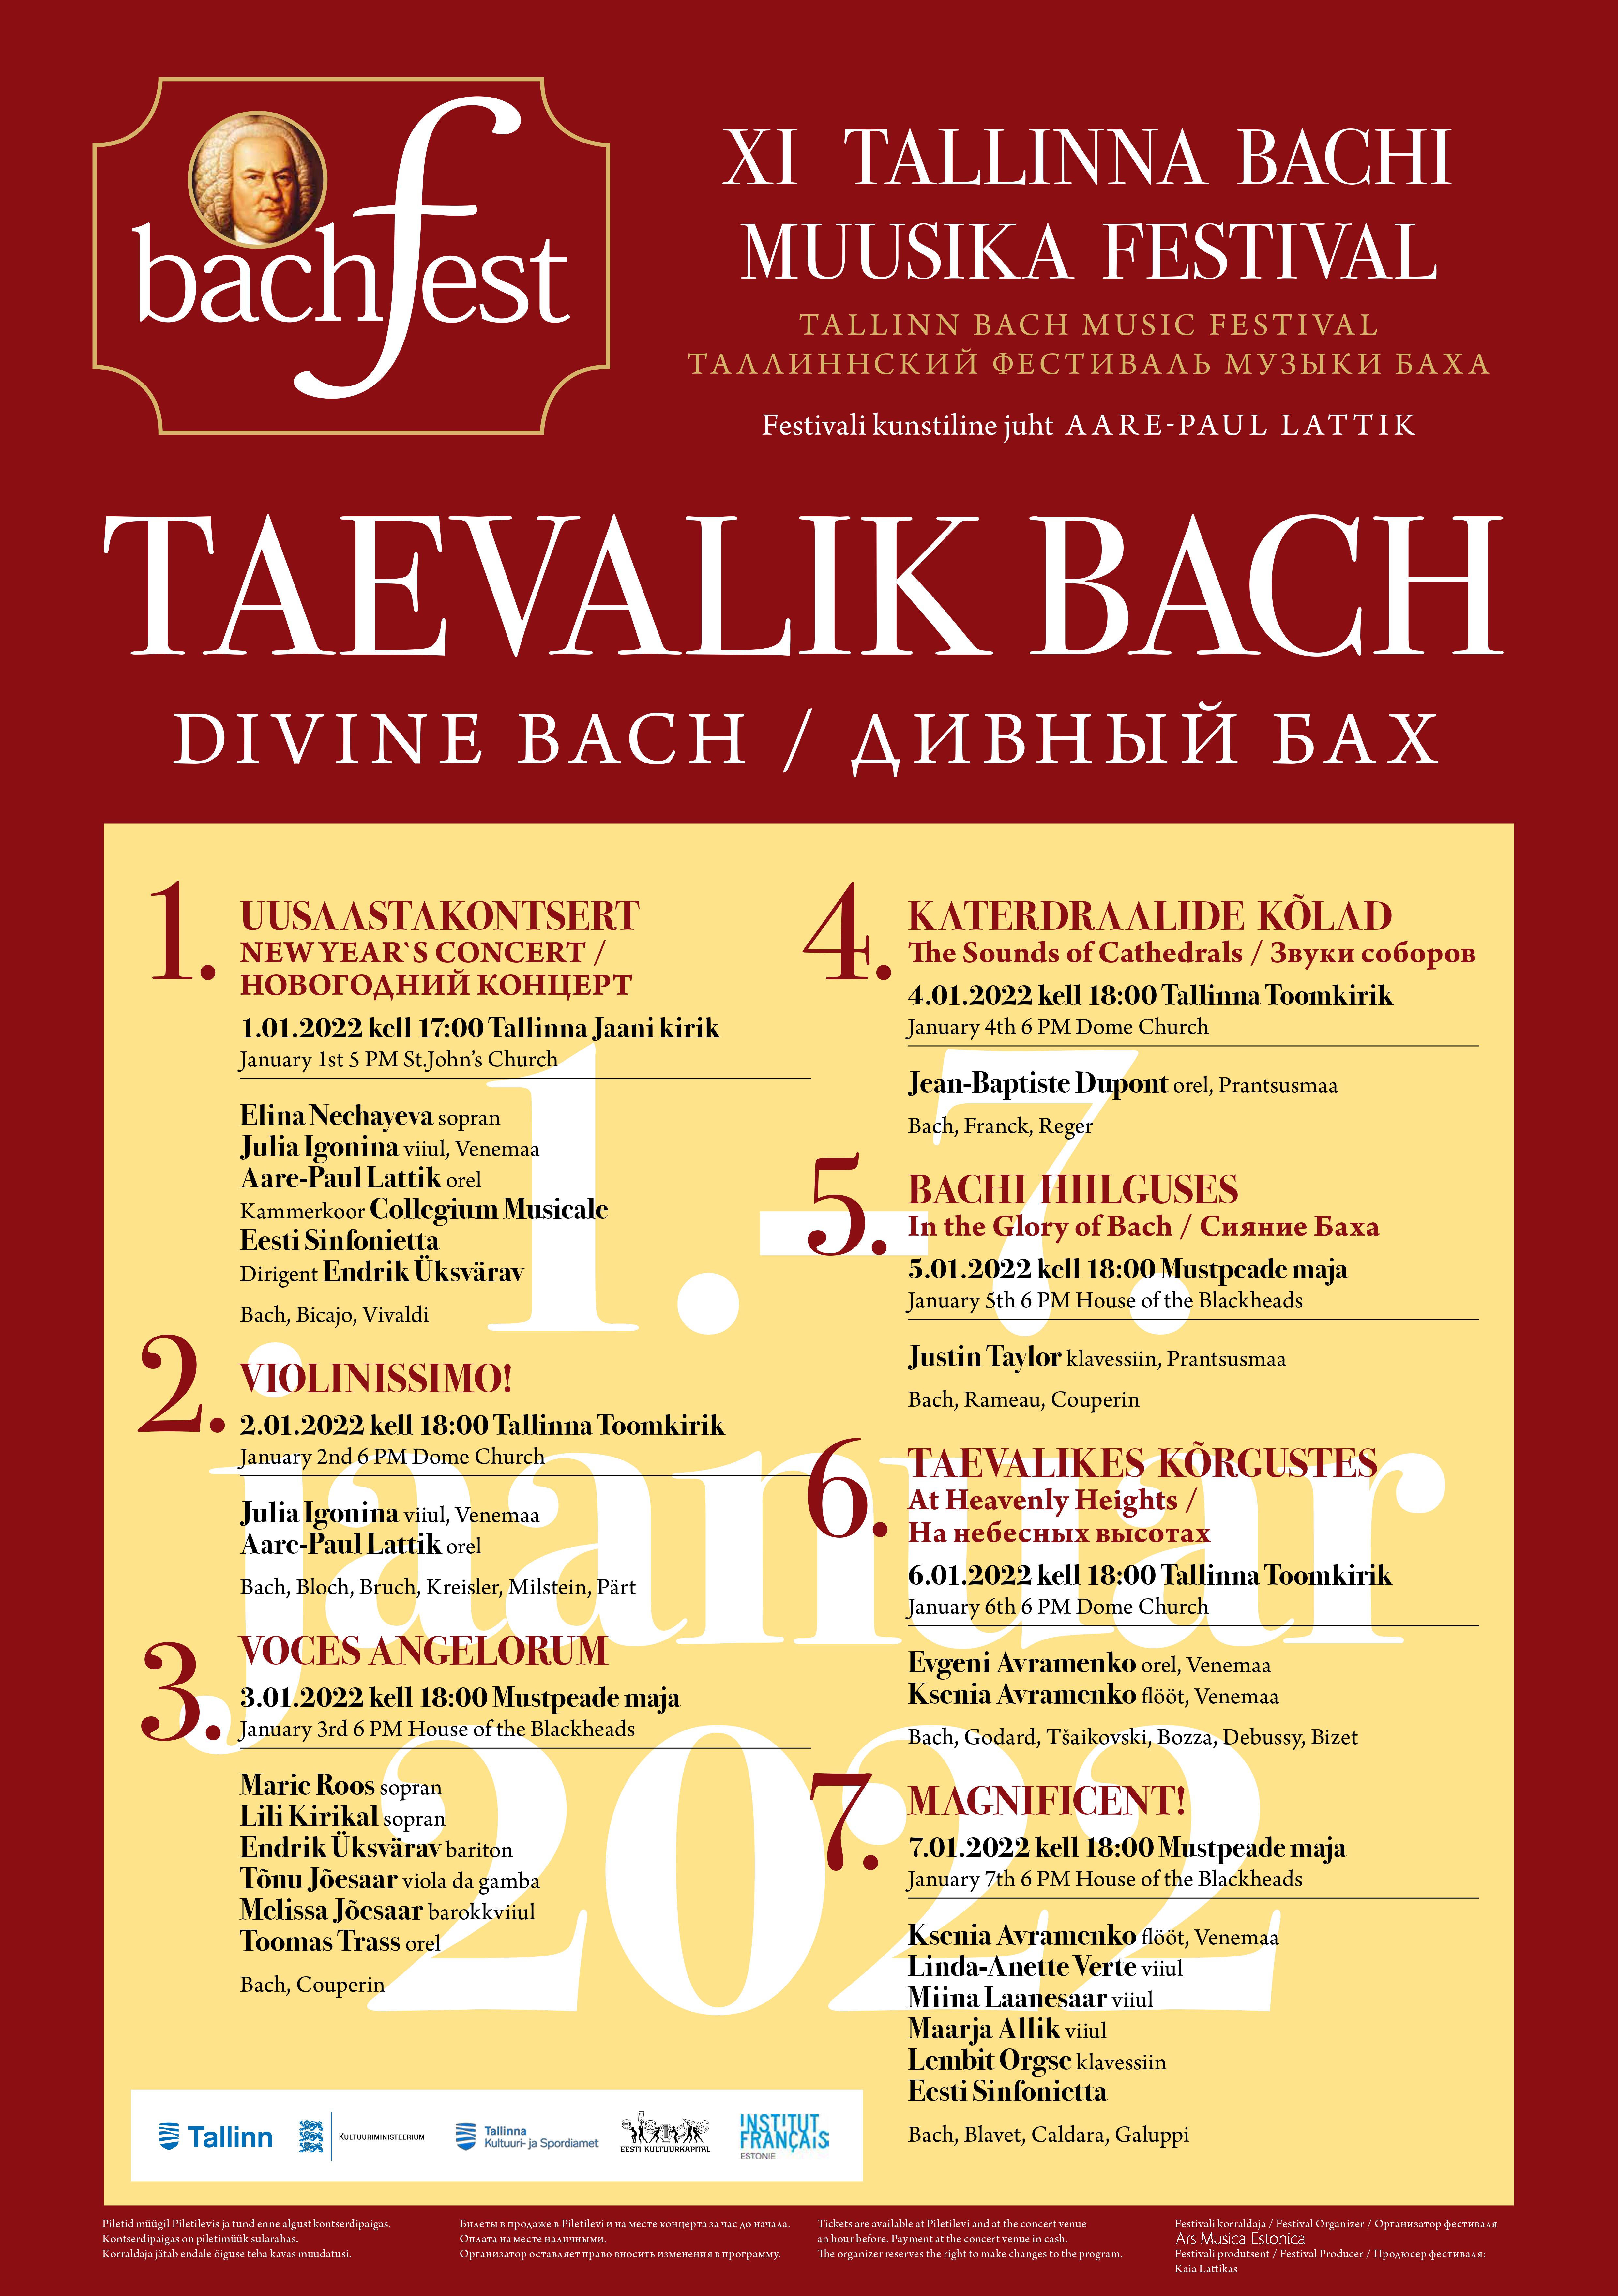 In the Glory of Bach/XI Tallinna Bachi muusika festival BACHFEST 2022